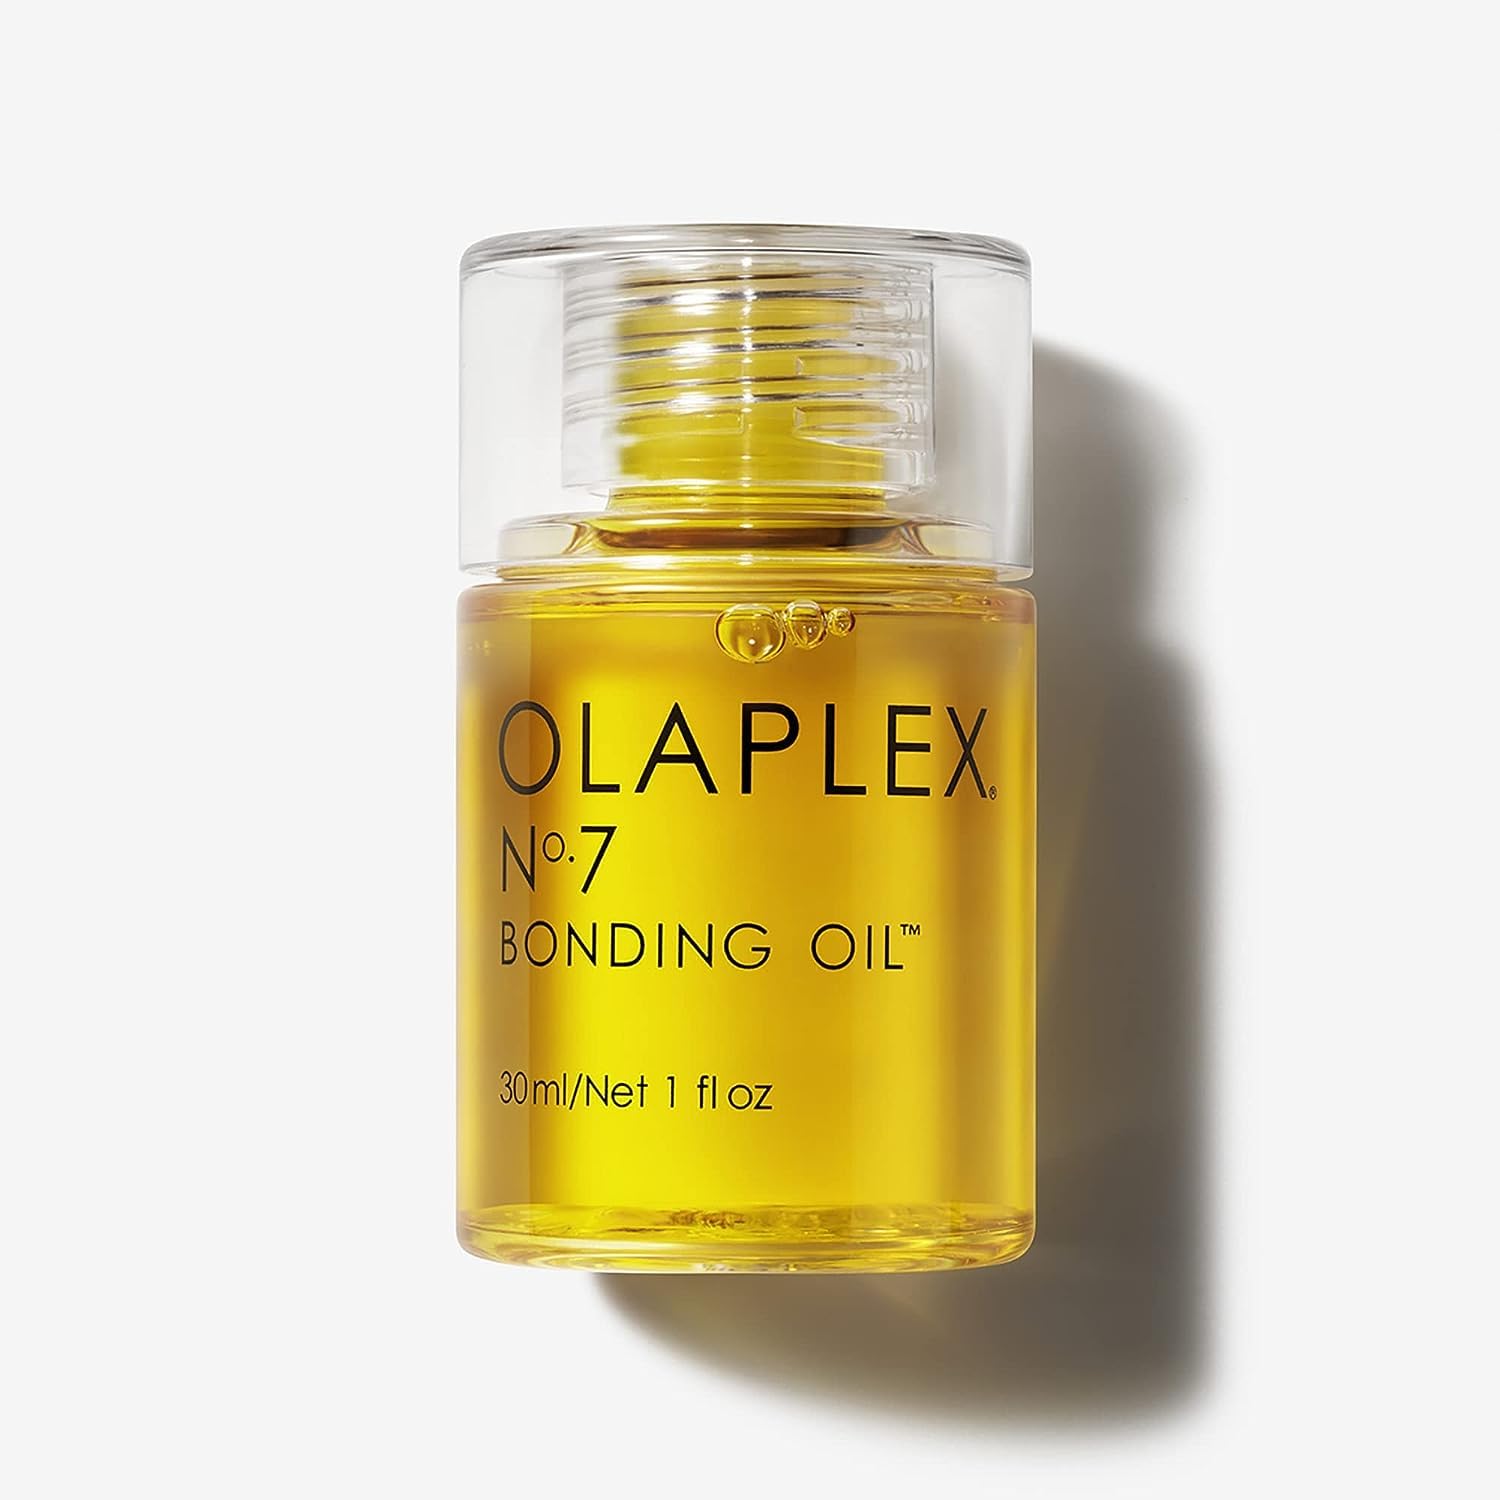 Olaplex No.7 Bonding Oil™